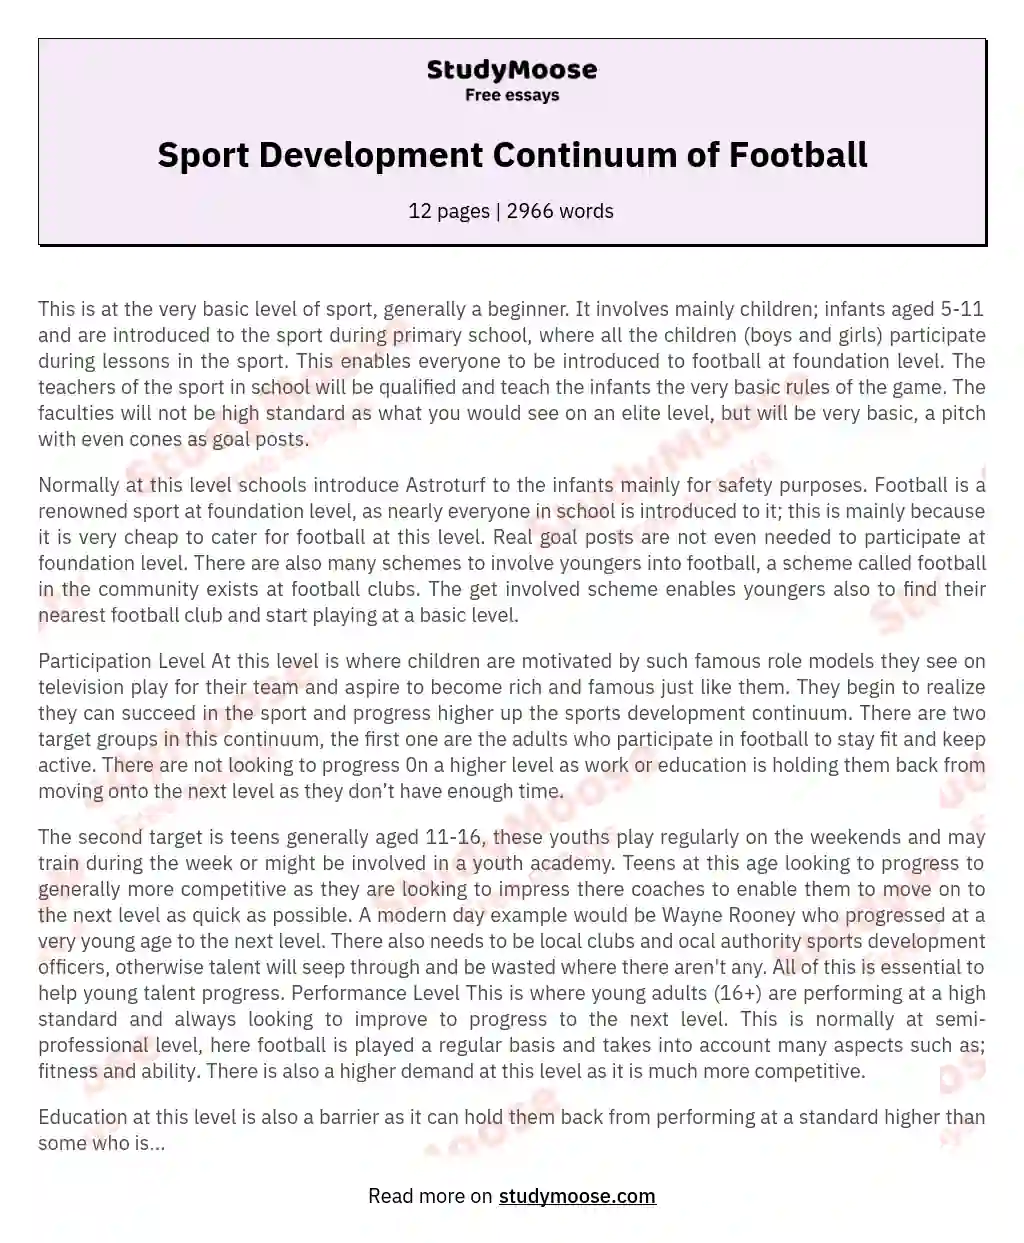 Sport Development Continuum of Football essay